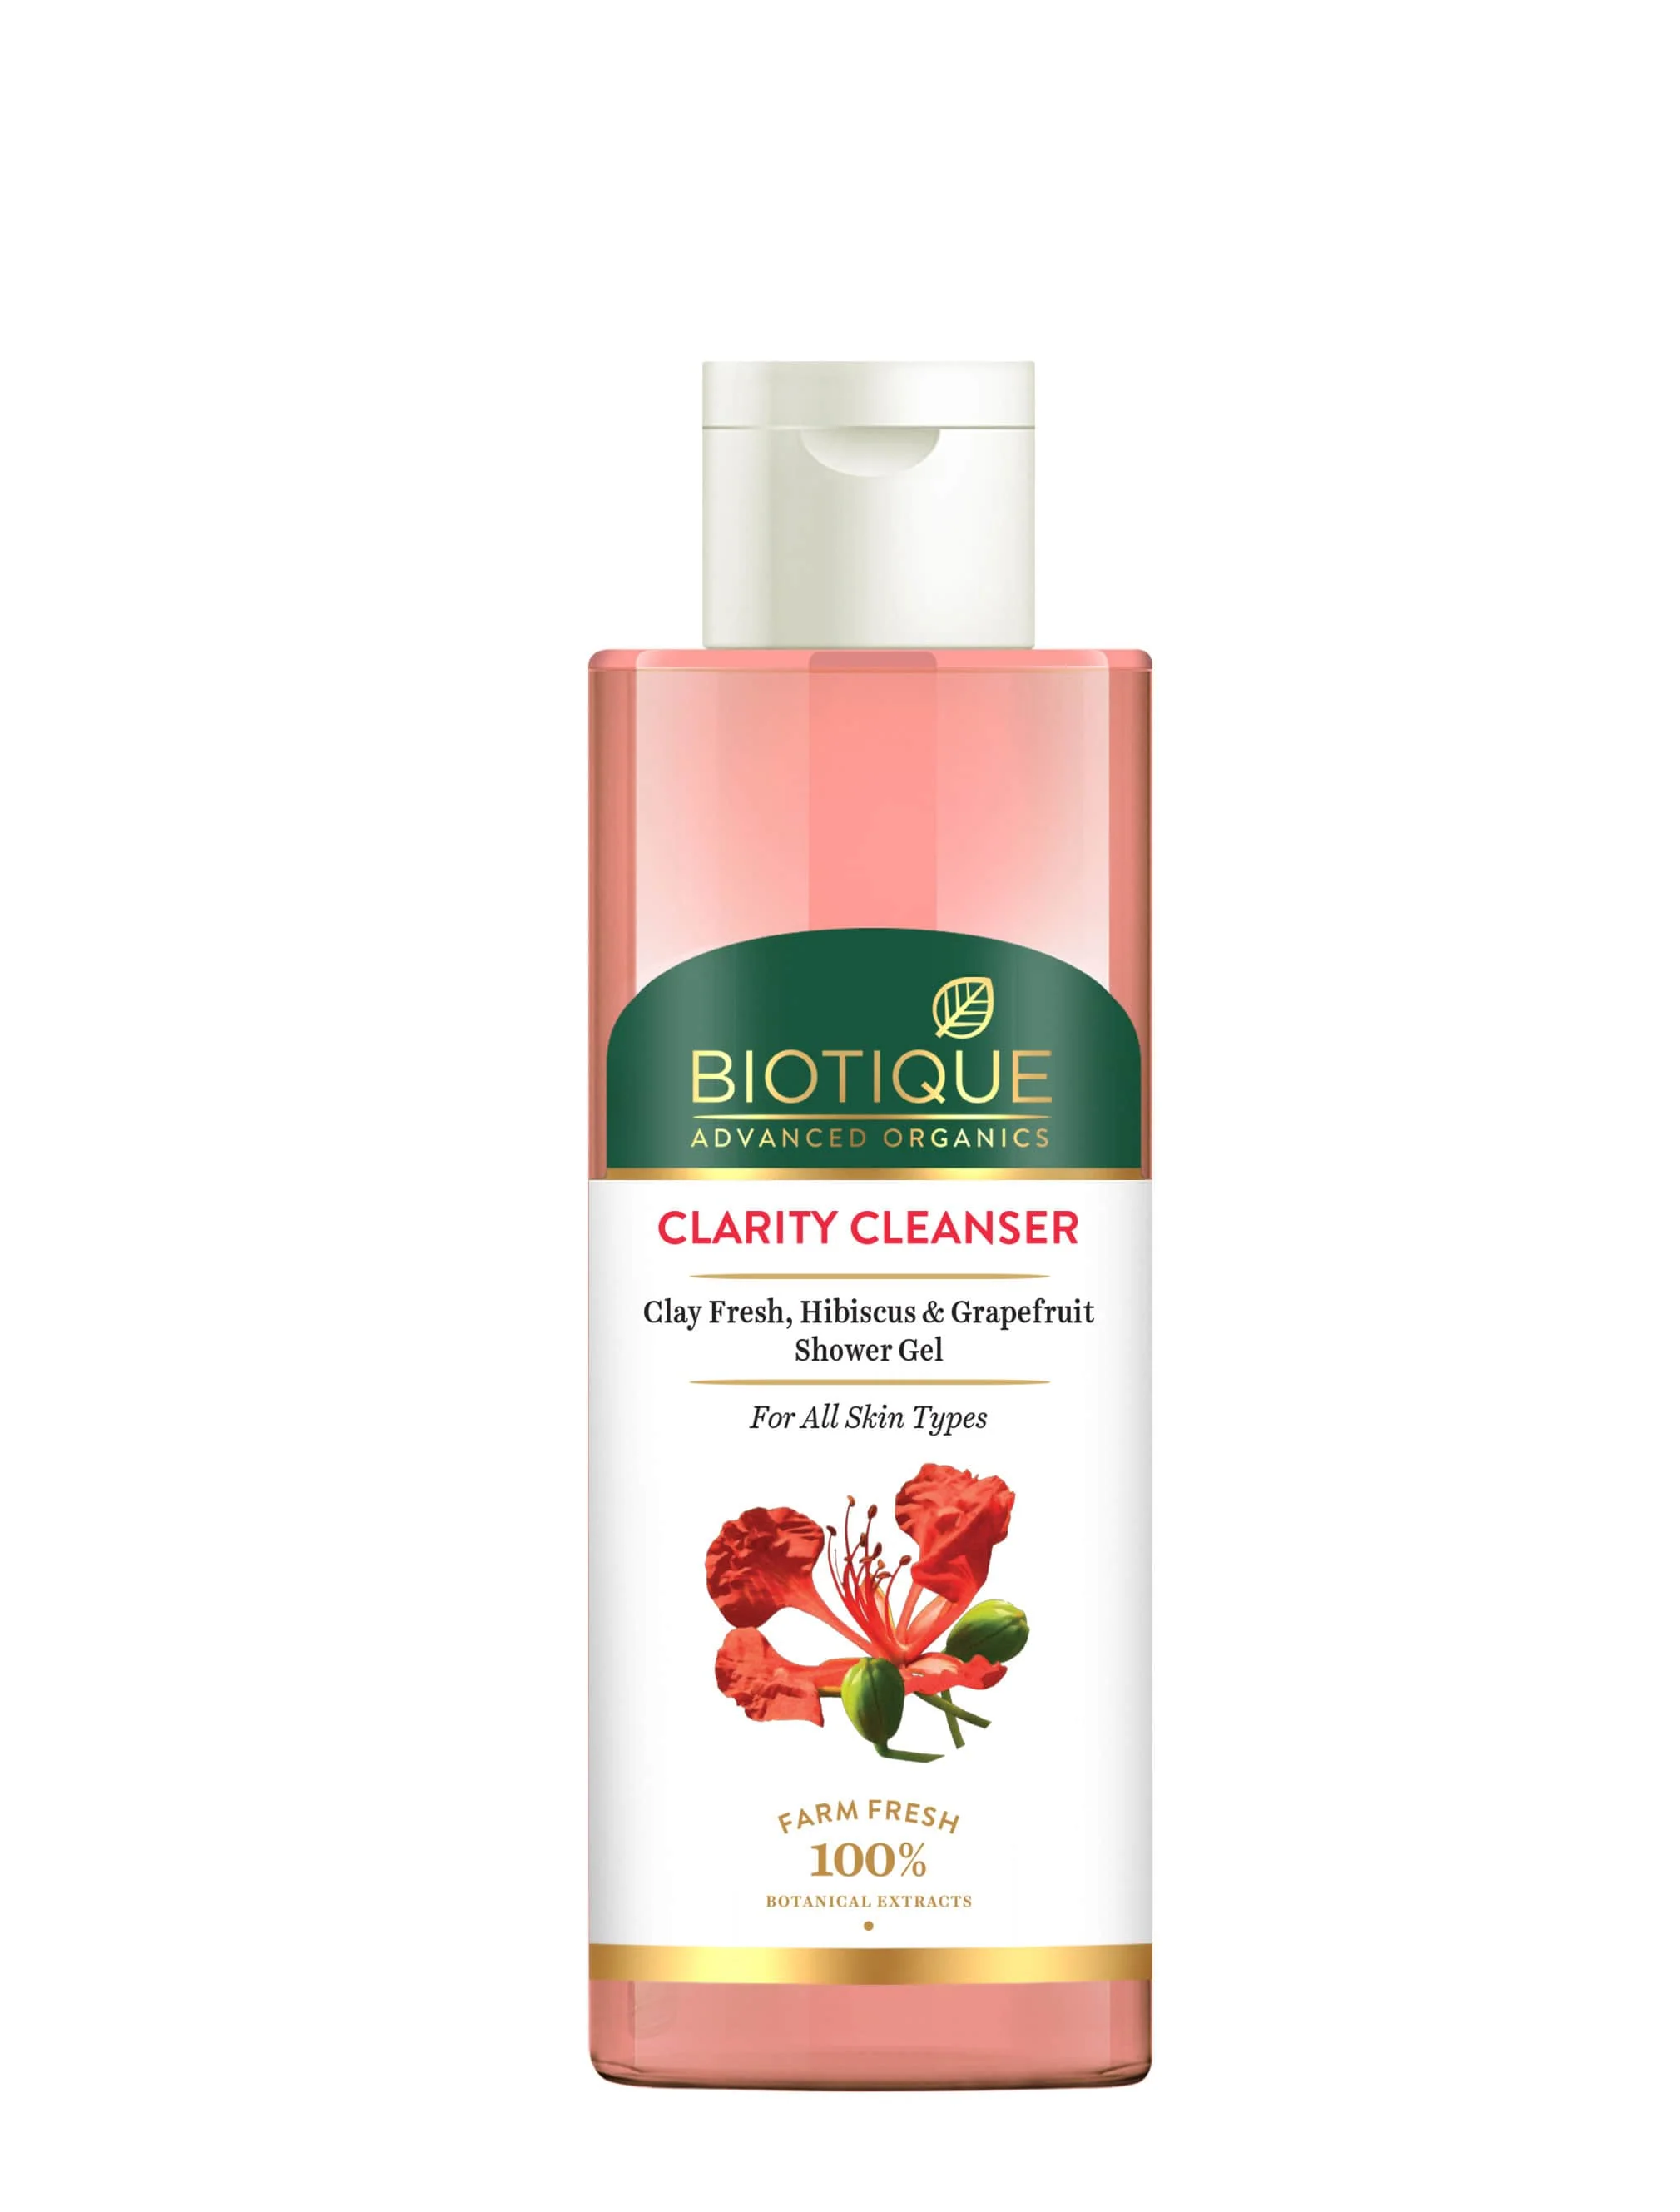 Biotique Clarity Cleanser Clay Fresh, Hibiscus & Grapefruit Shower Gel 200ml